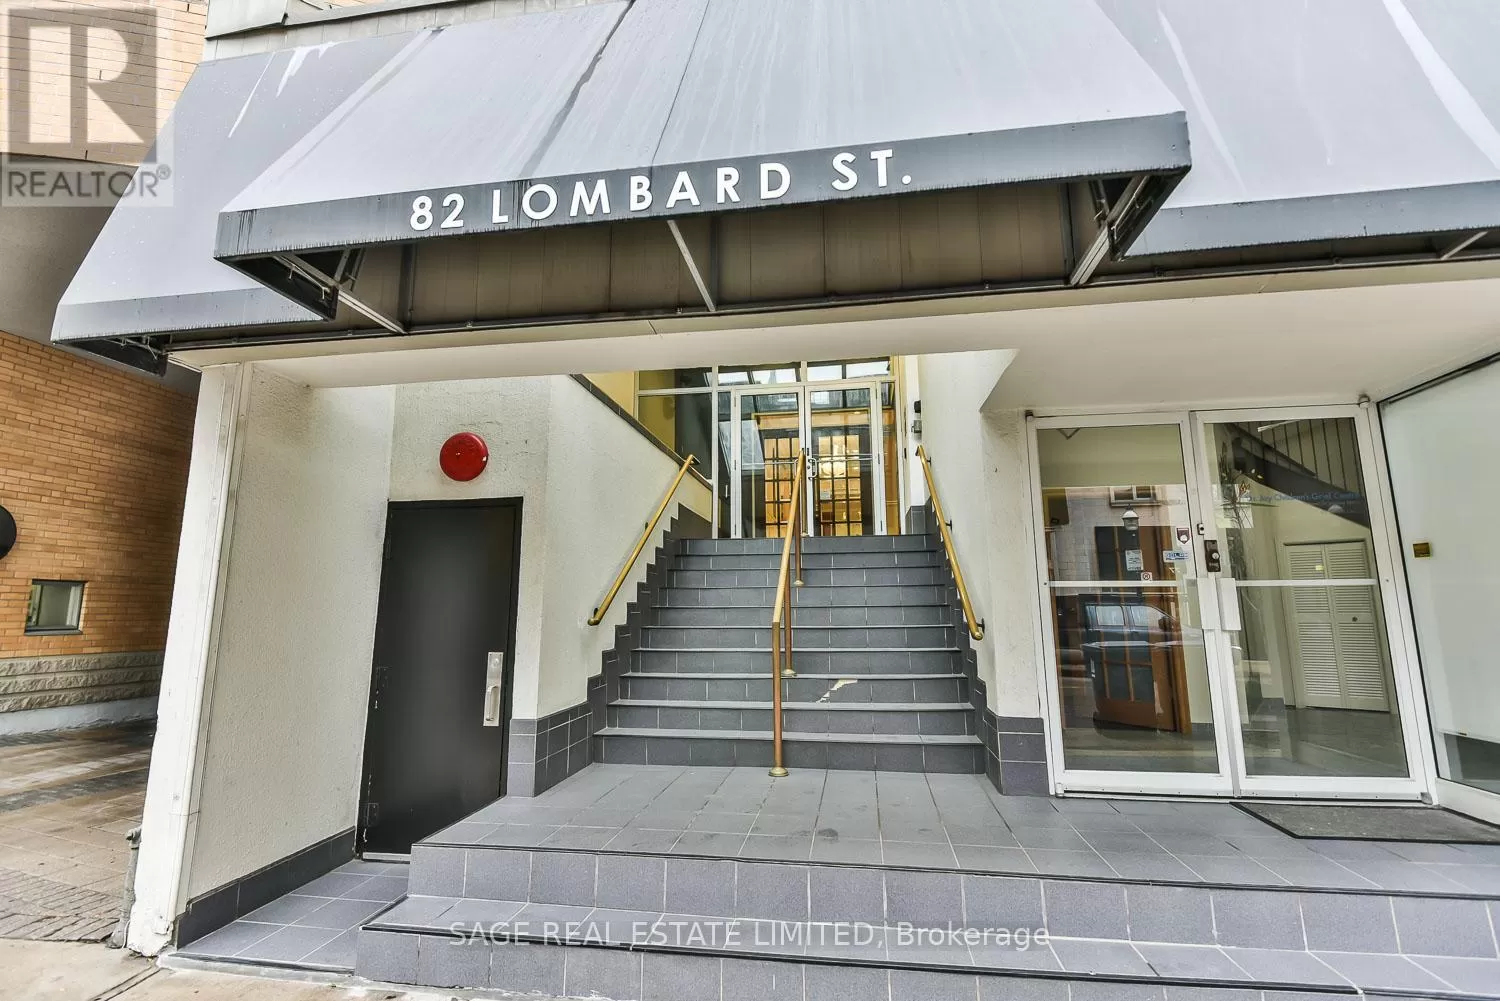 Apartment for rent: 412 - 82 Lombard Street, Toronto, Ontario M5C 2S8